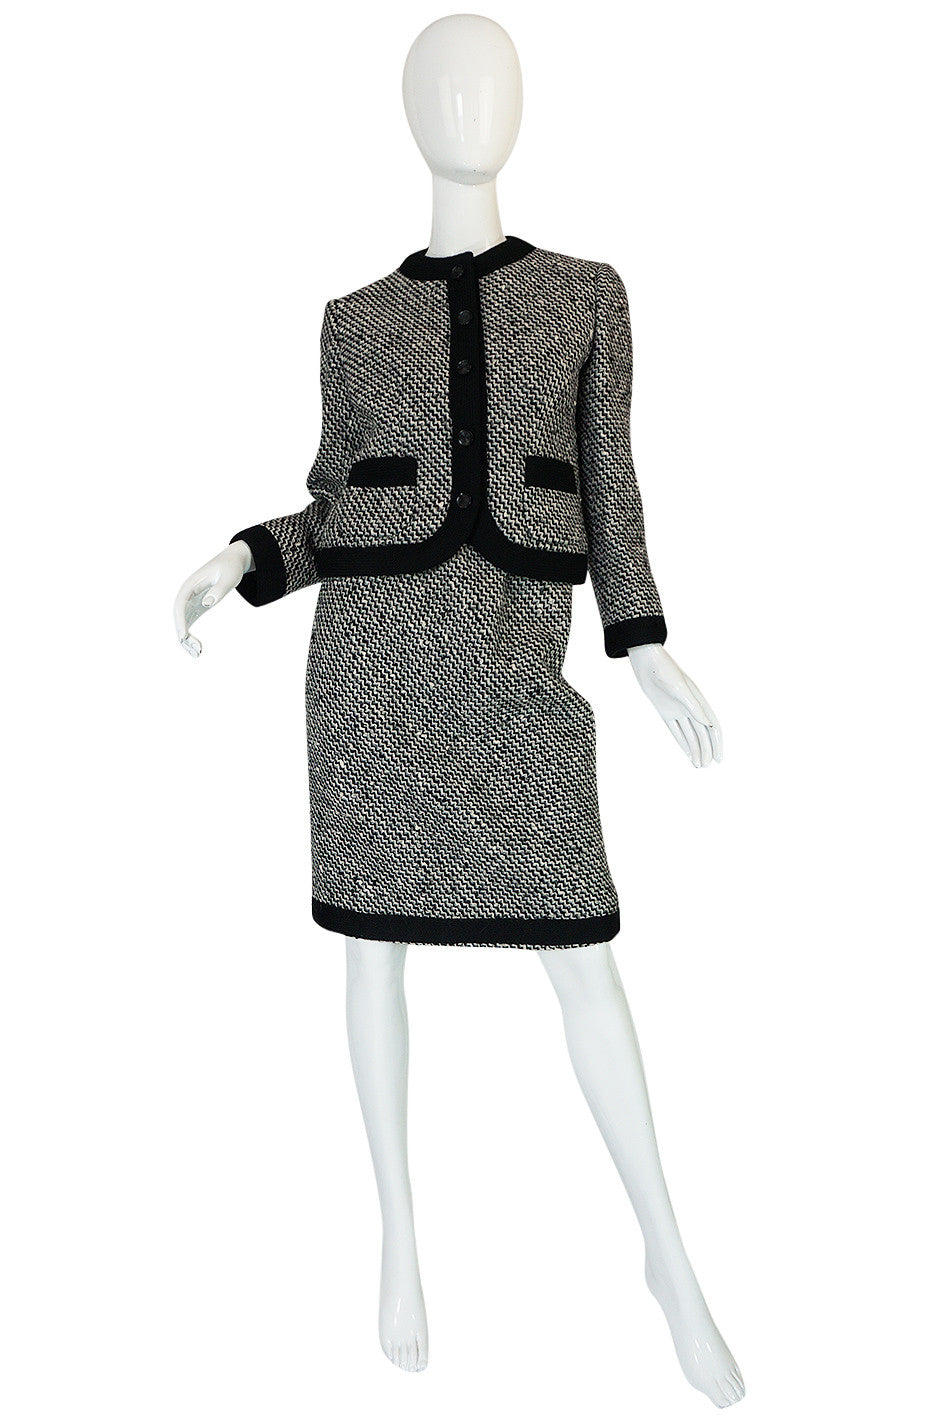 Documented 1968 Marc Bohan for Christian Dior Suit – Shrimpton Couture